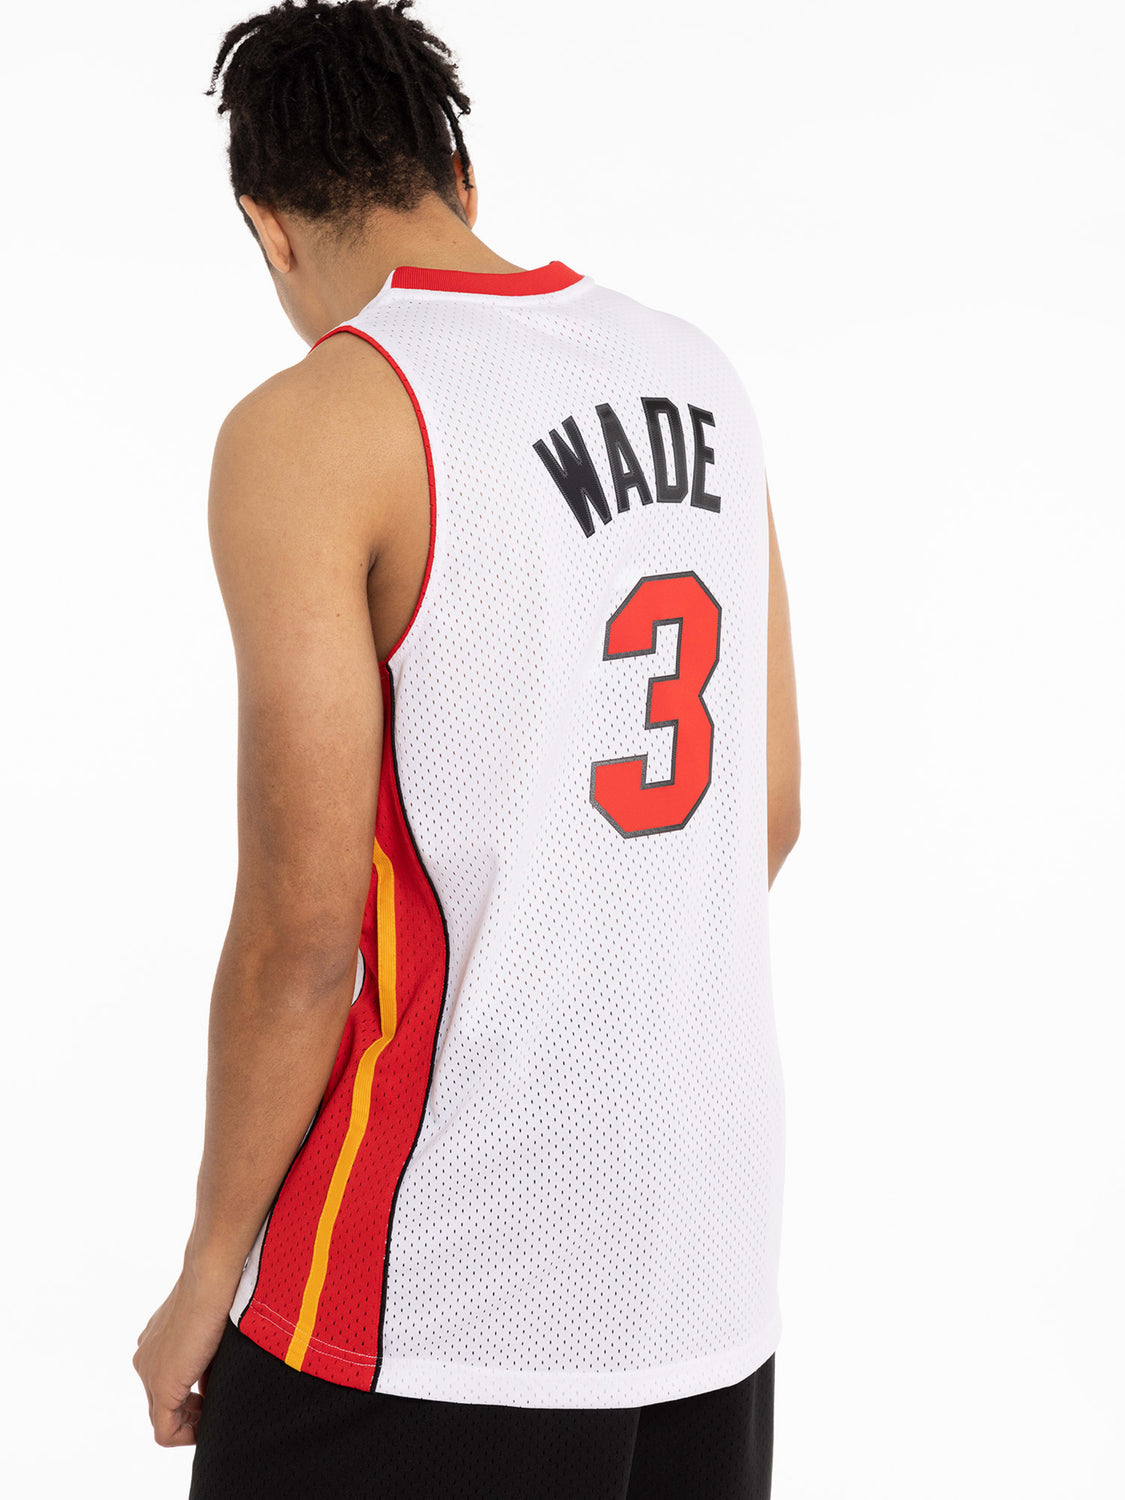 Dwyane Wade 05-06 Miami Heat Authentic Jersey